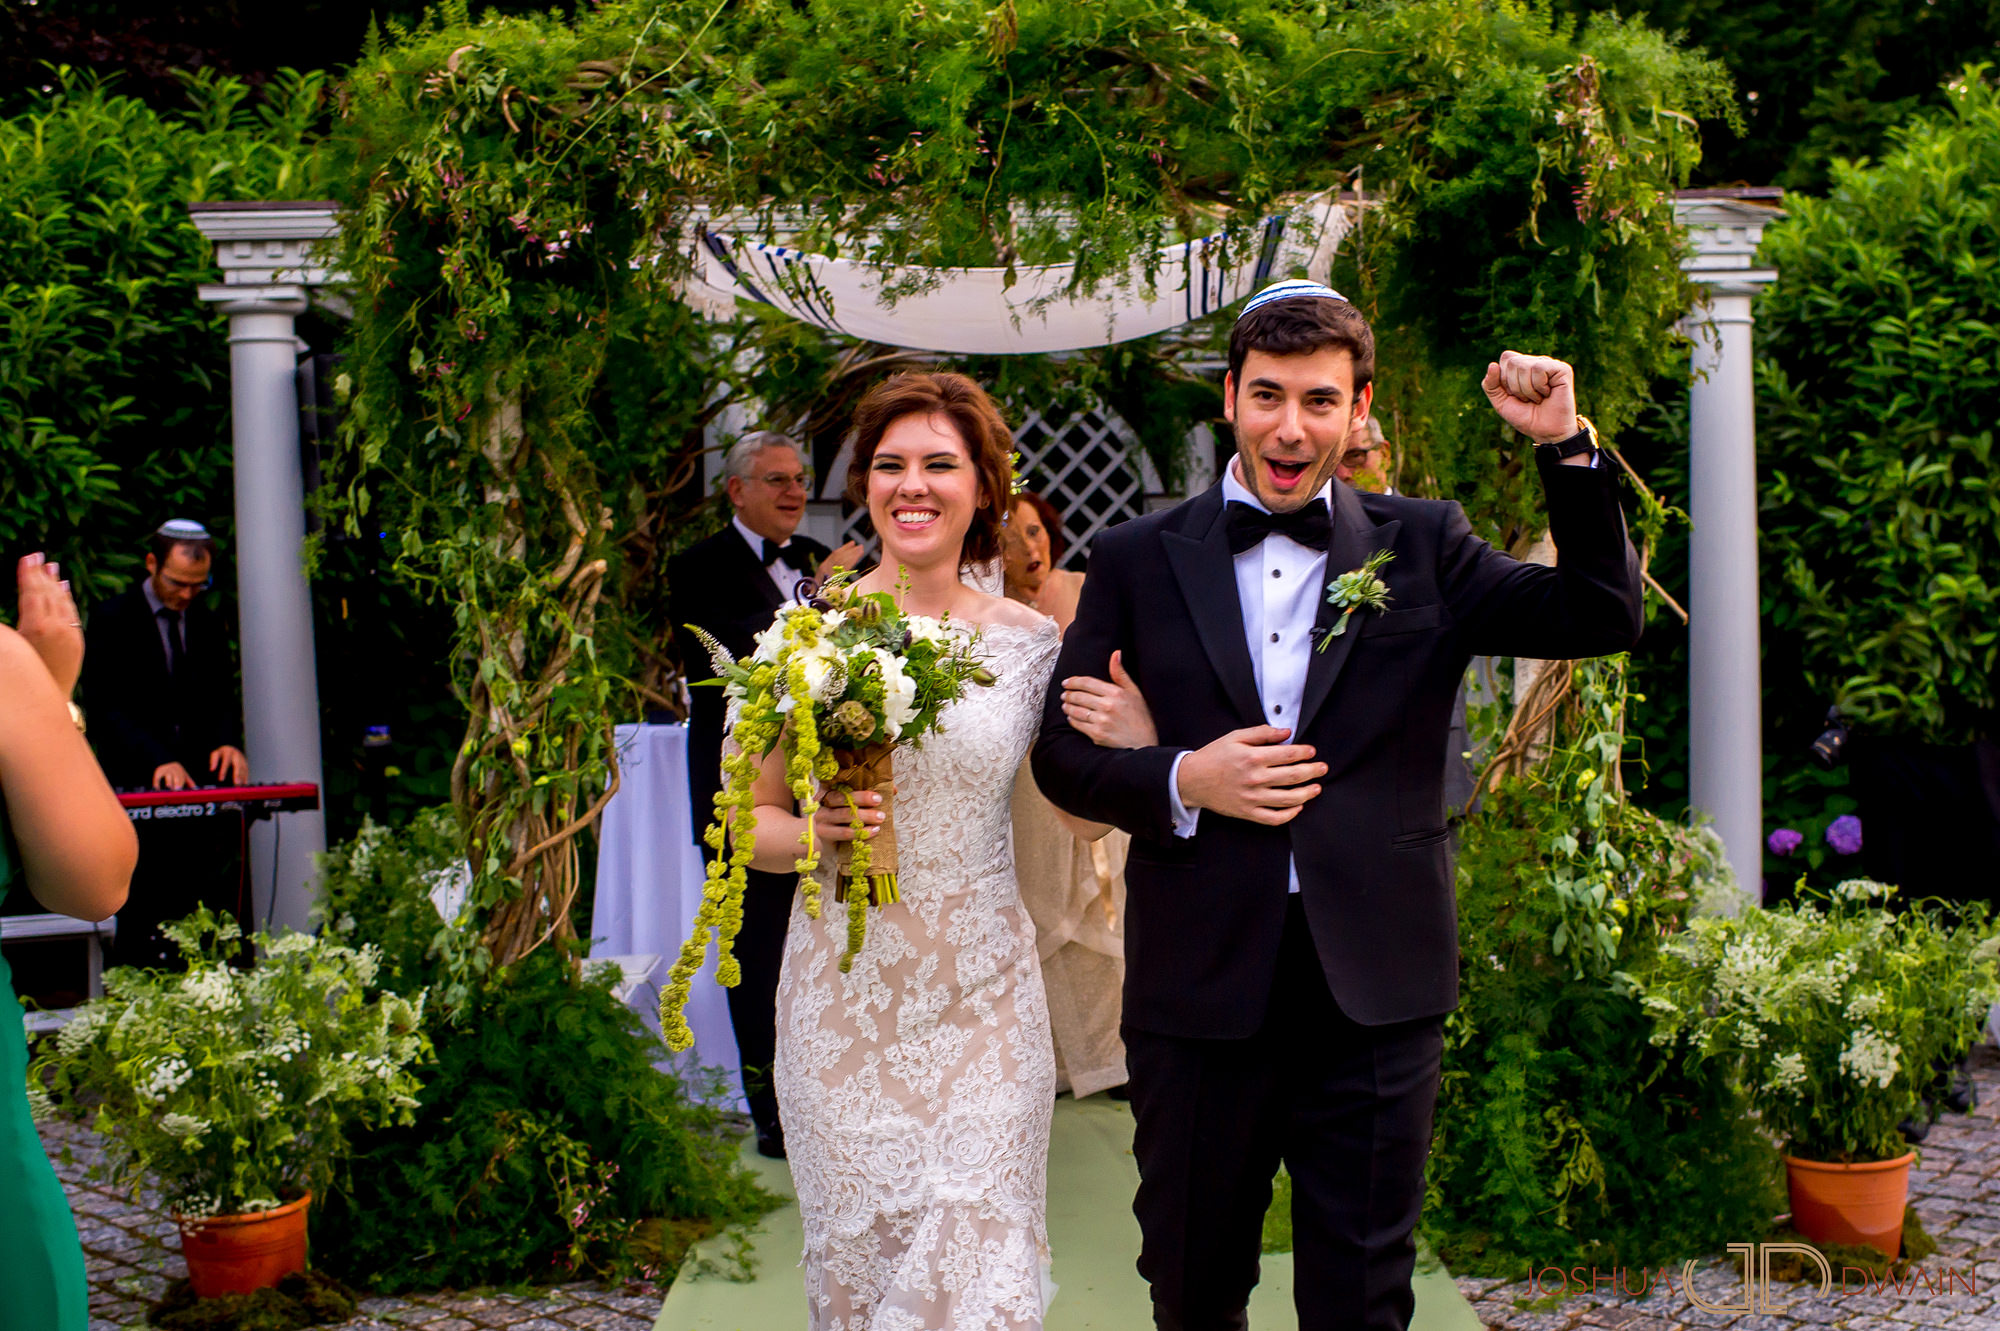 Rachel & Andres' wedding at the New York Botanical Gardens in Bronx, NY